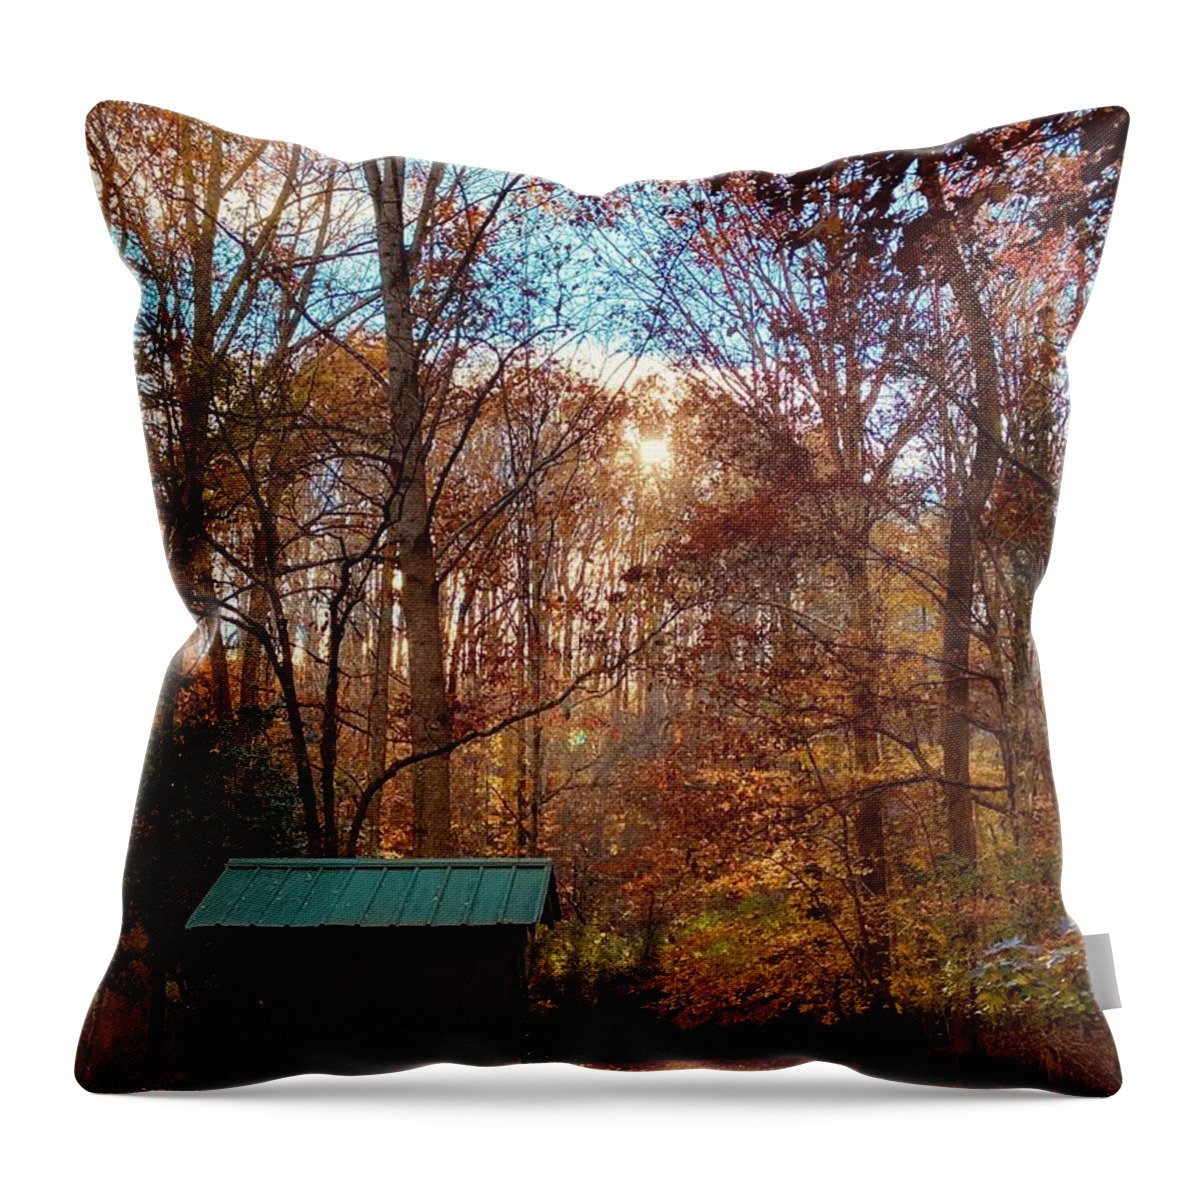 Fall Throw Pillow featuring the photograph Yesterdays autumn dream by Jason Bohannon